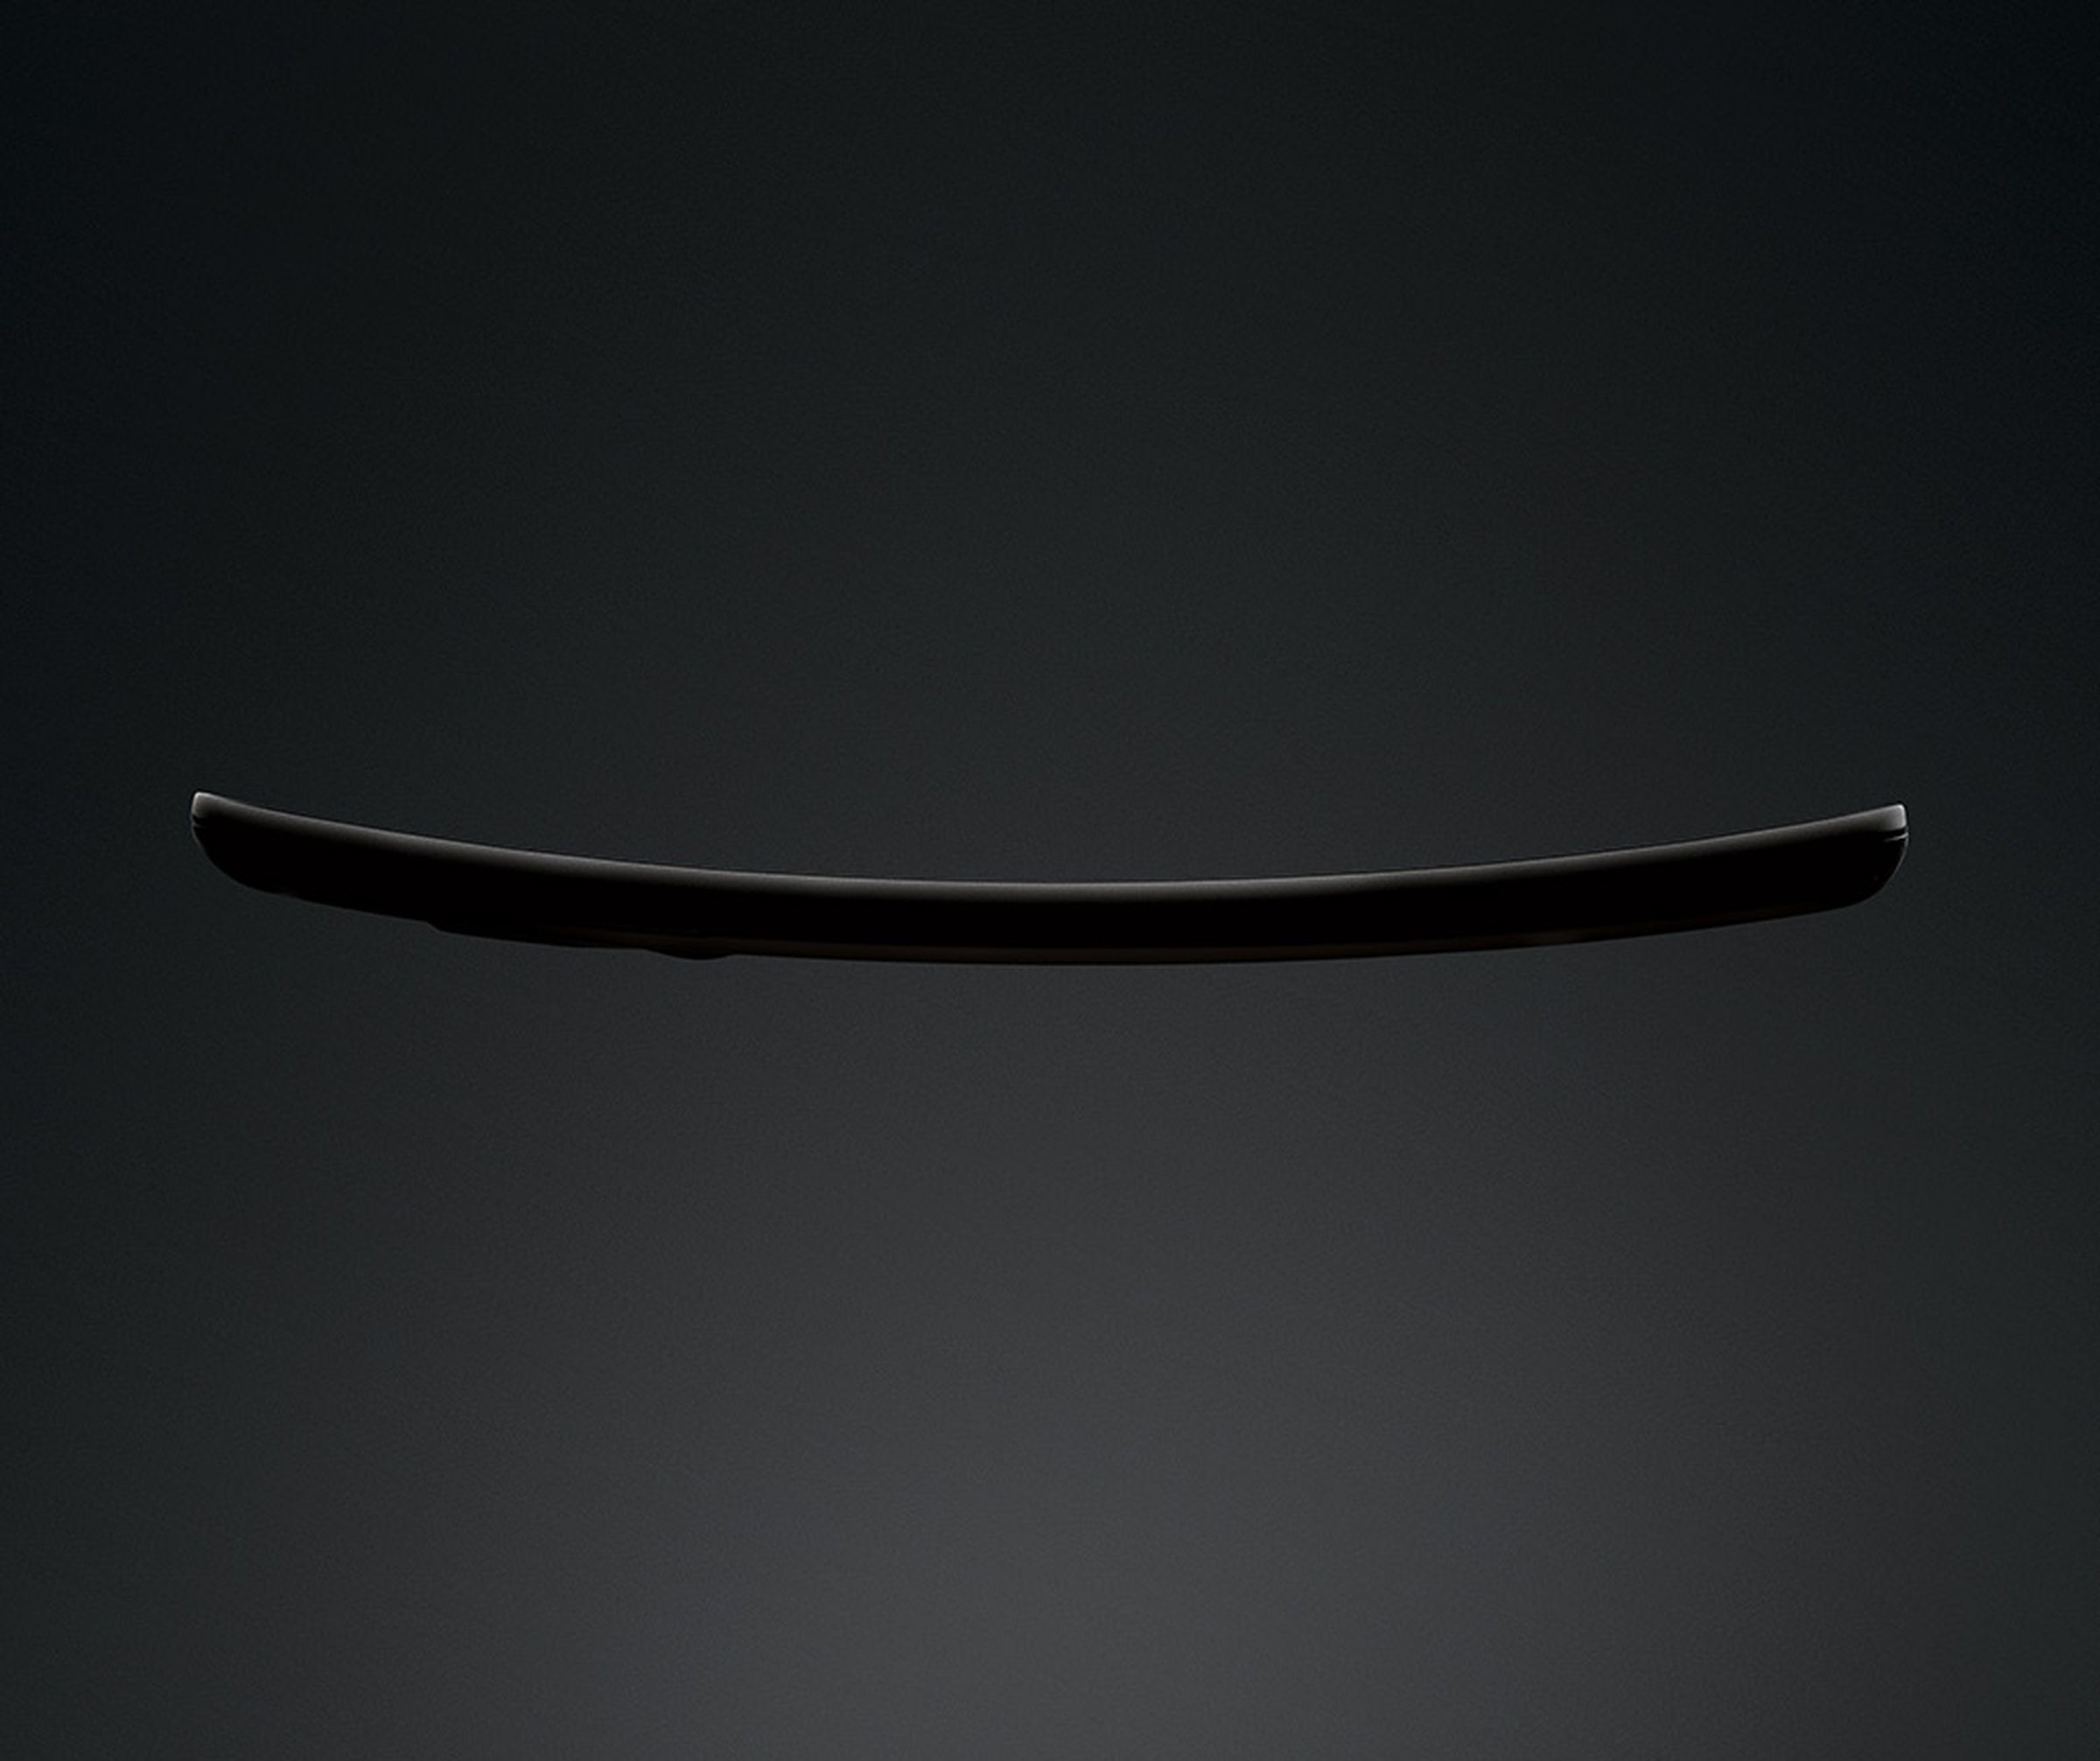 LG G Flex curved smartphone renders